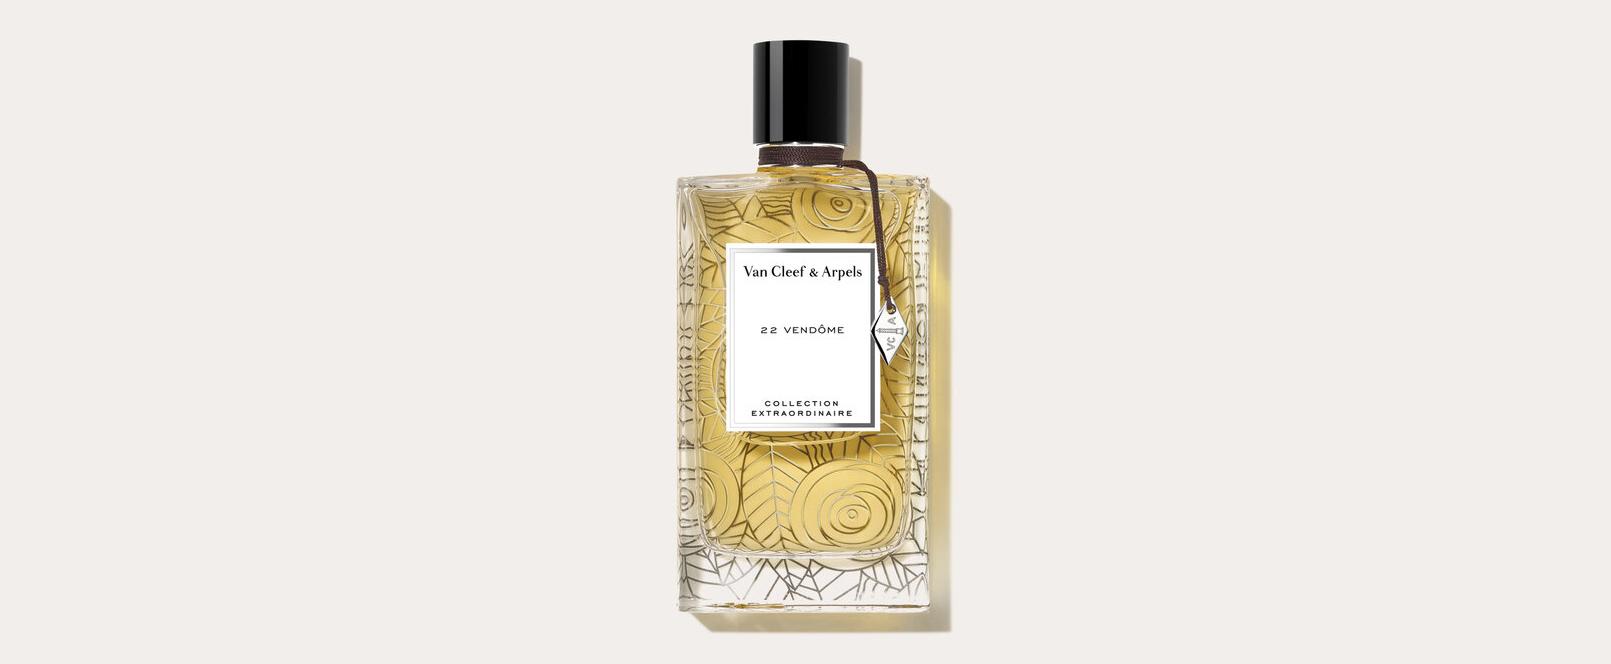 „22 Vendôme“ - Van Cleef & Arpels erweitert die Collection Extraordinaire